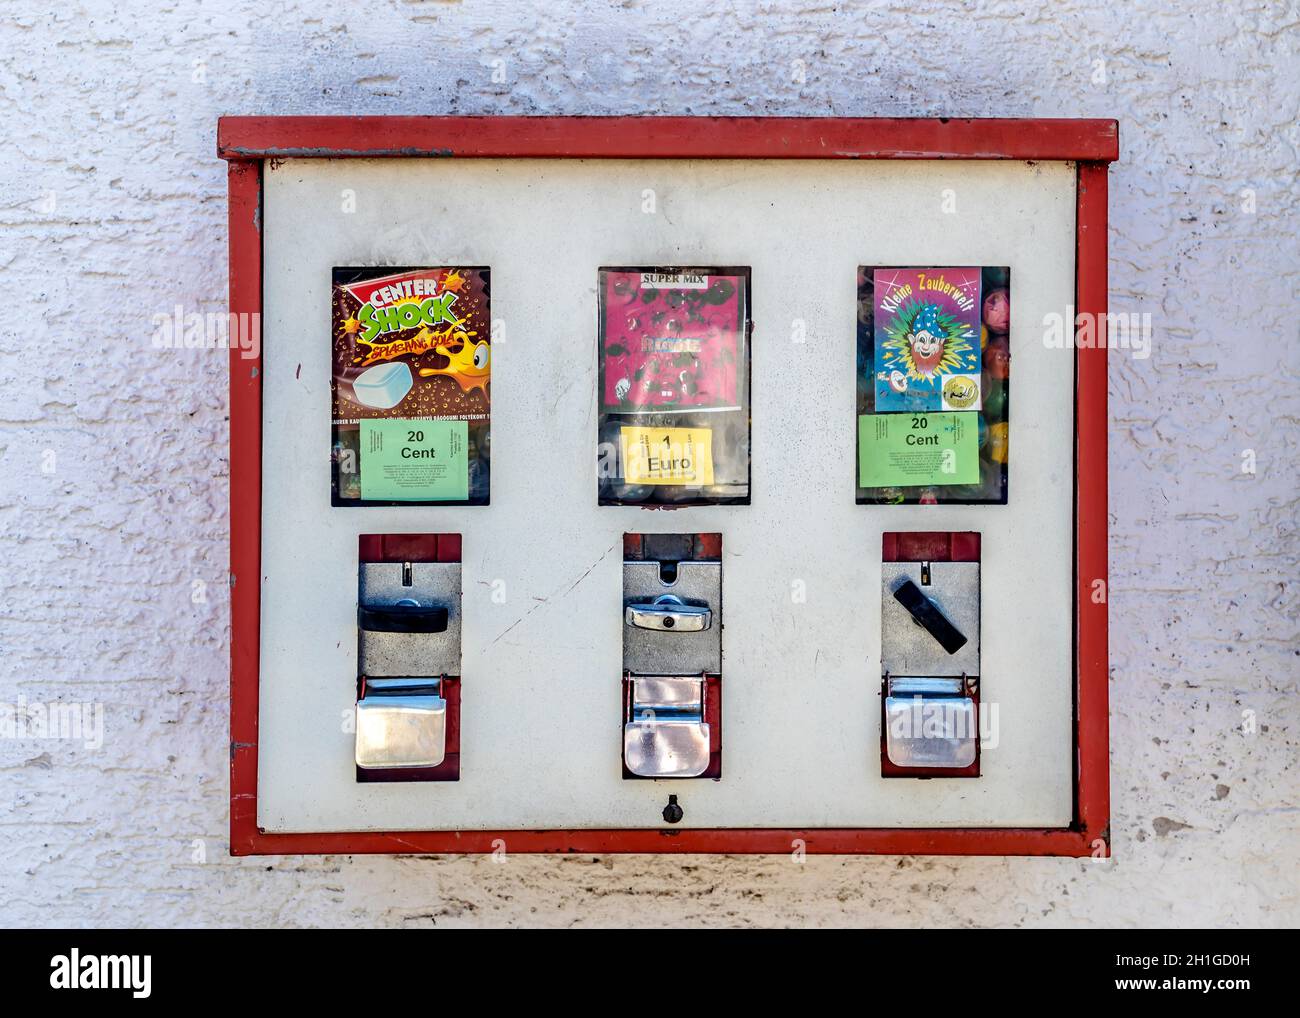 Wall automat -Fotos und -Bildmaterial in hoher Auflösung – Alamy